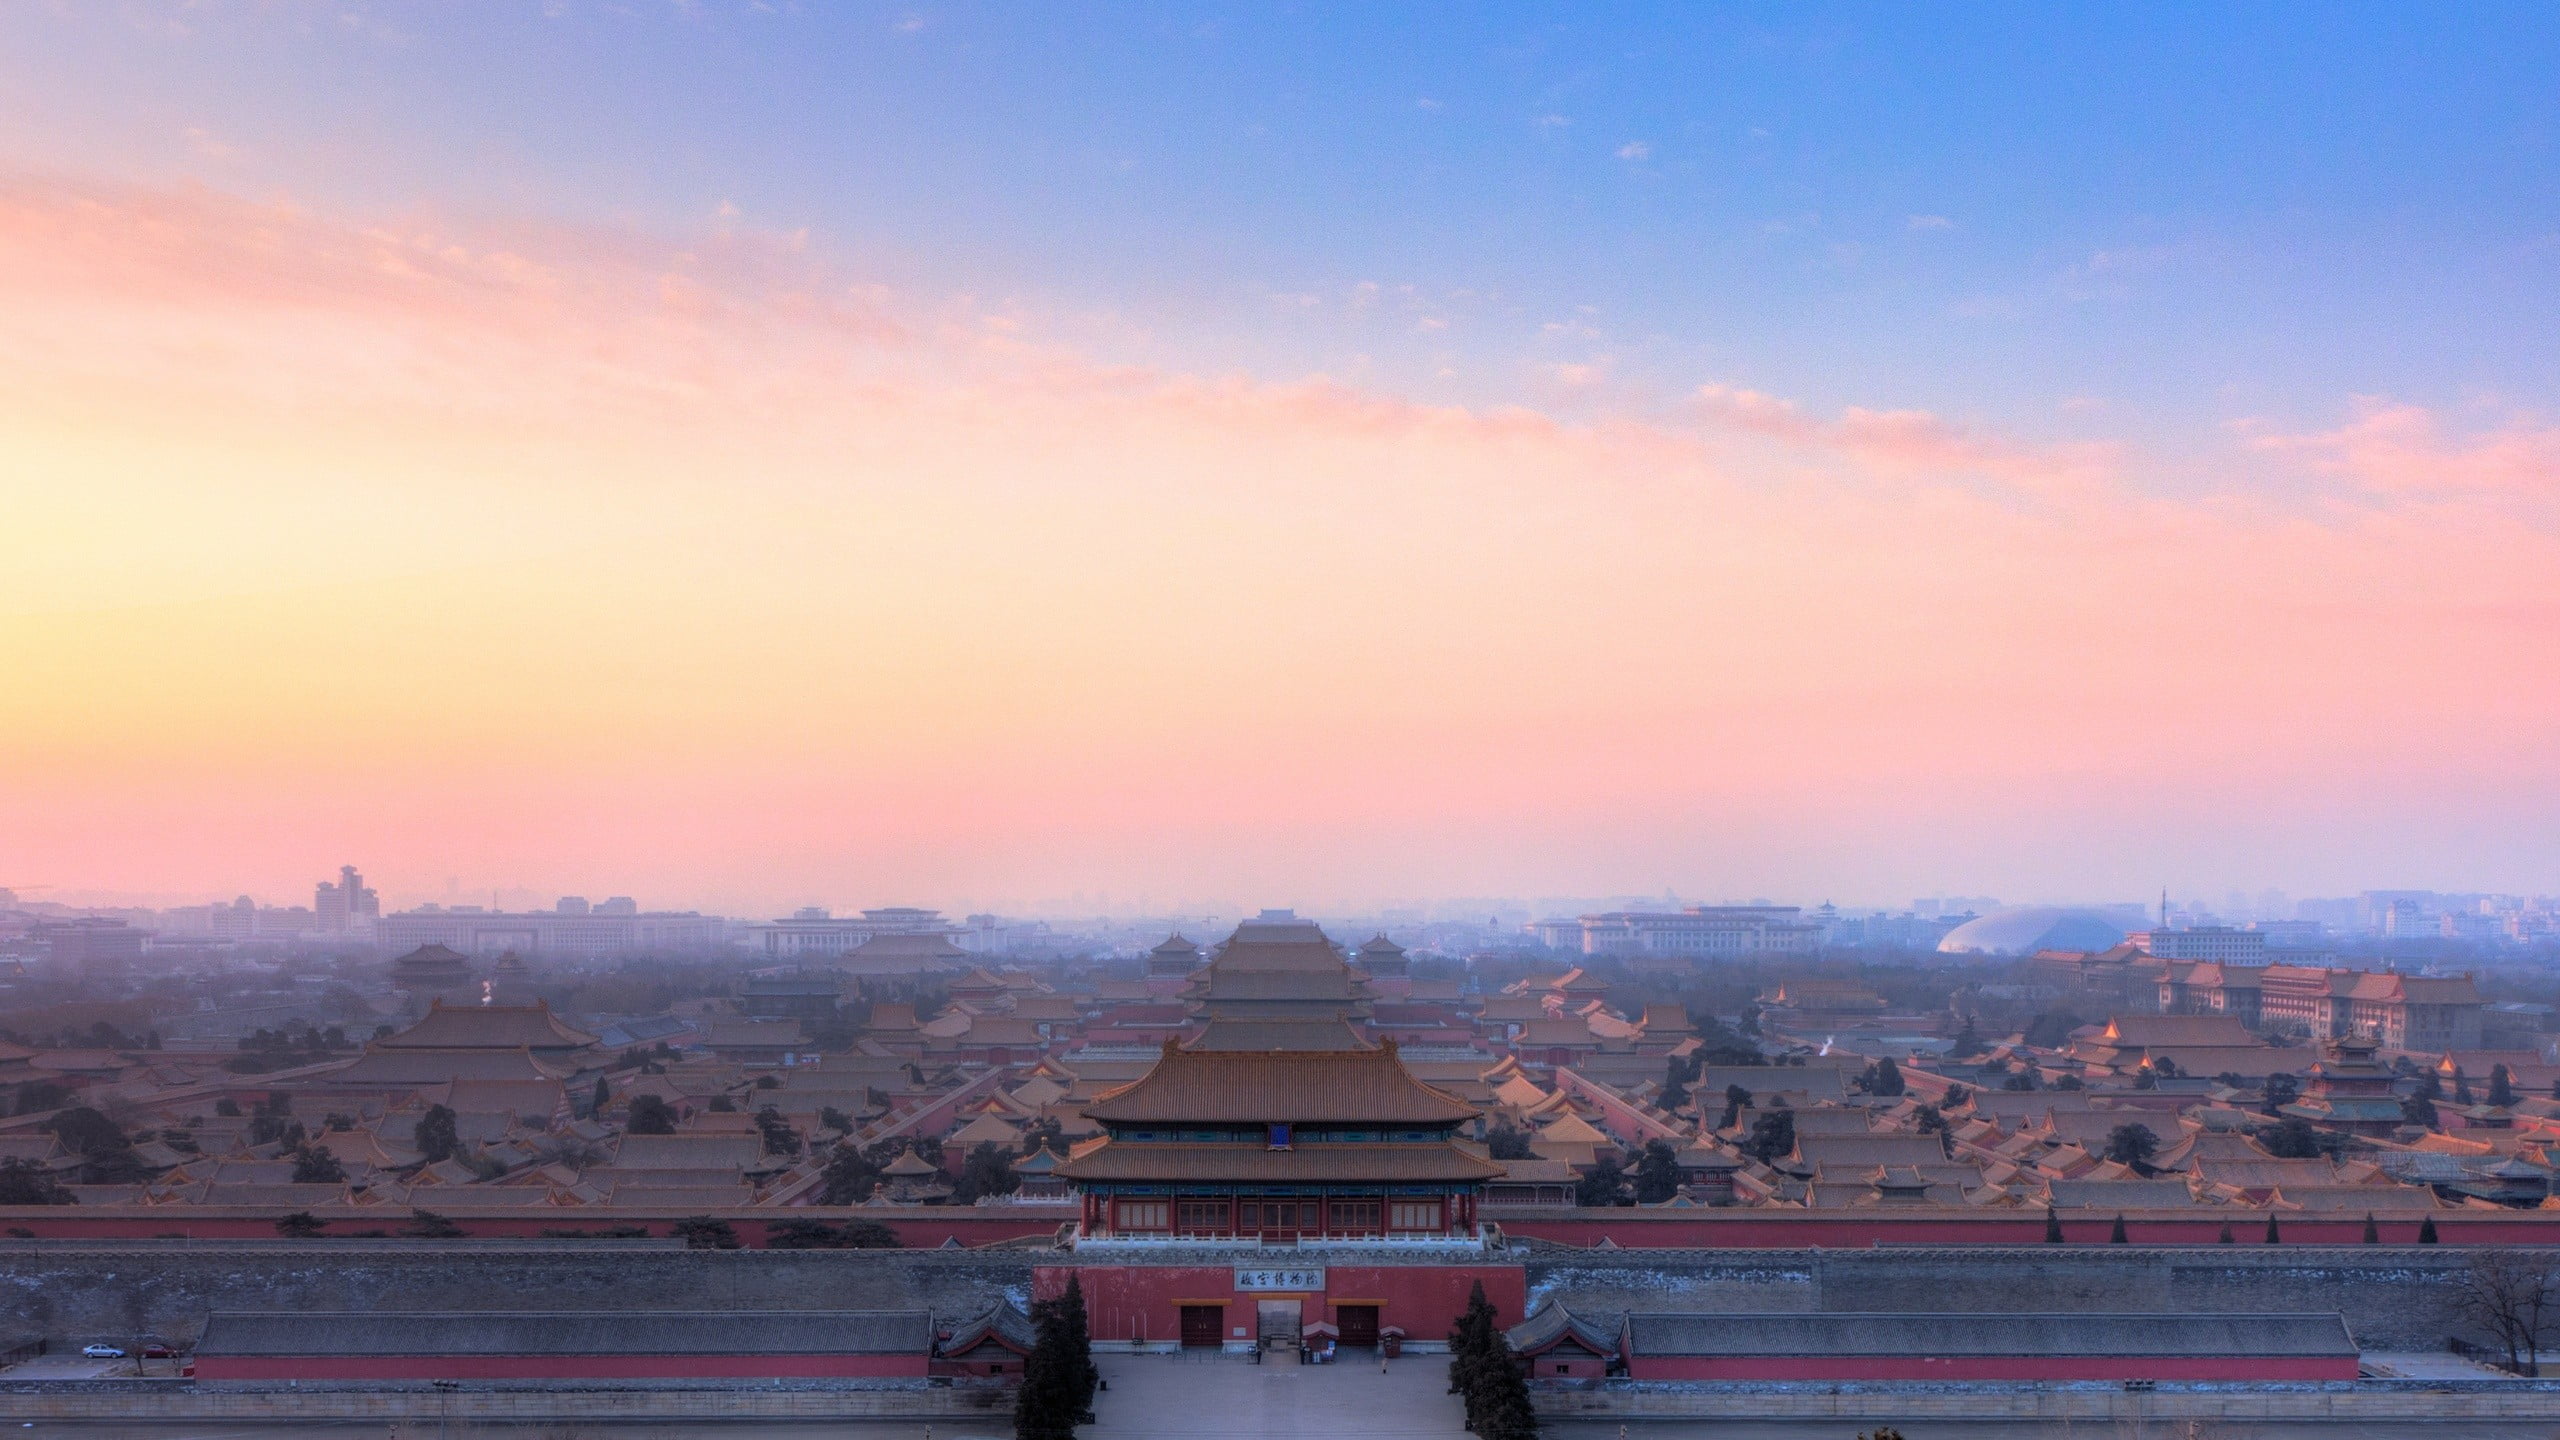 Forbidden City, China, photography, landscape, Beijing, Forbidden City